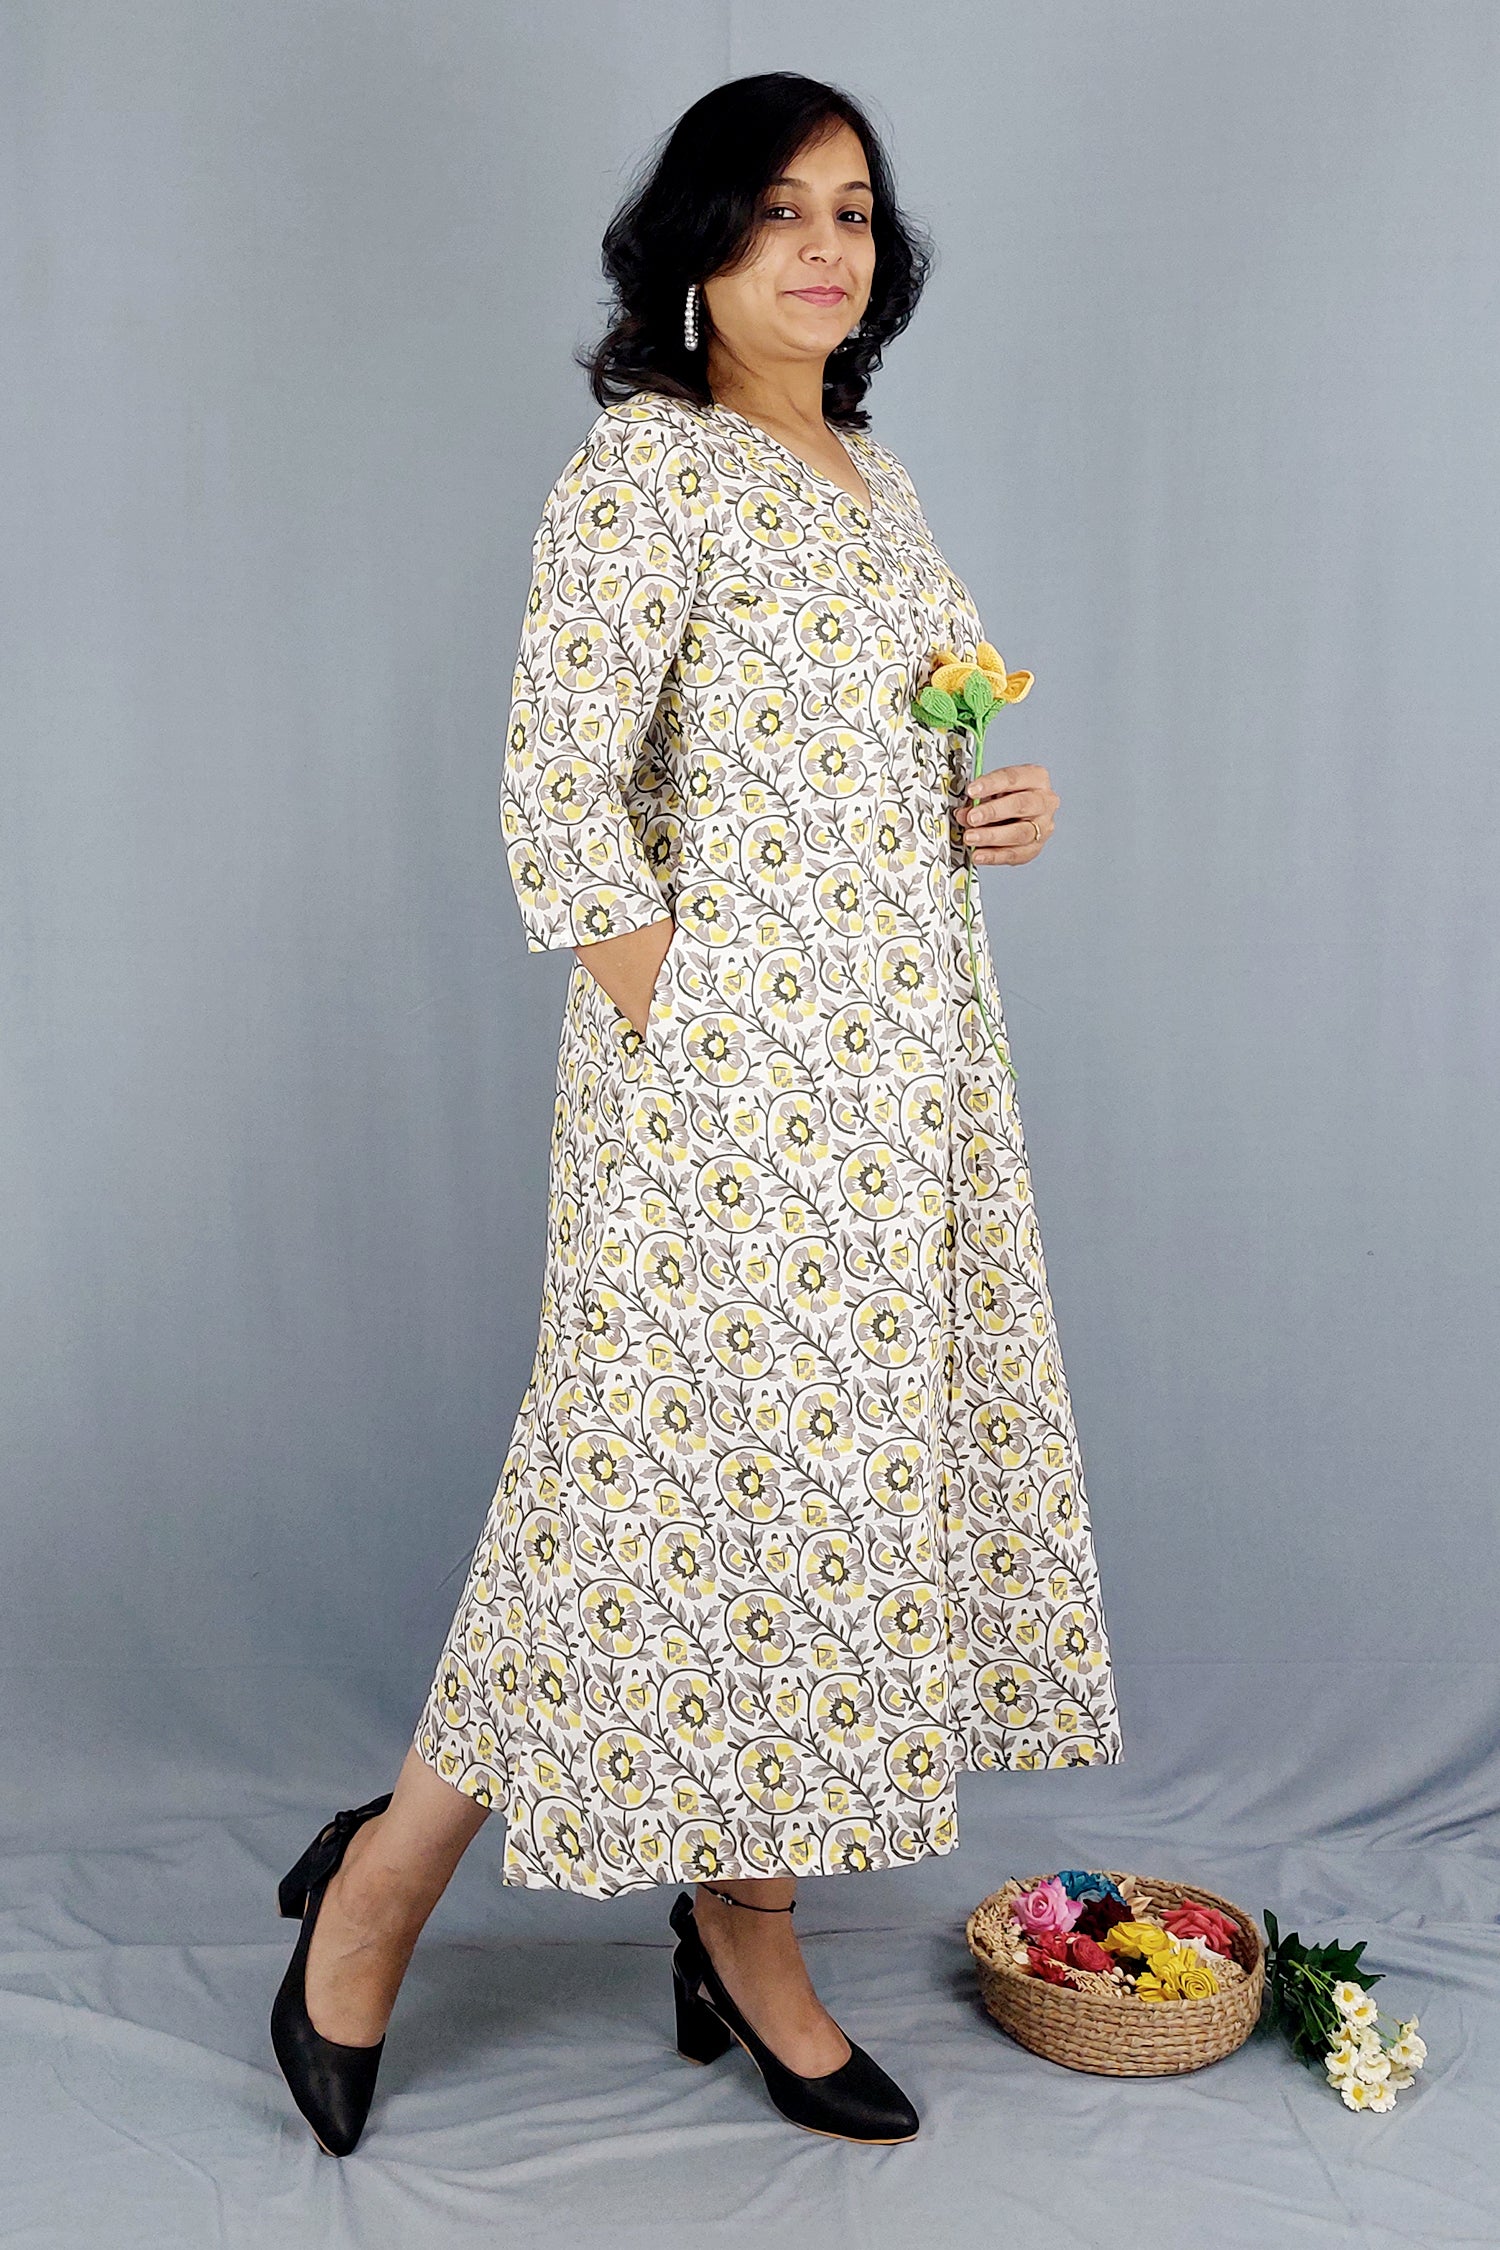 Floral Printed Cotton Maxi Dress Dress Floral Printed Cotton Maxi Dress Dress Floral Printed Cotton Maxi Dress Dress 